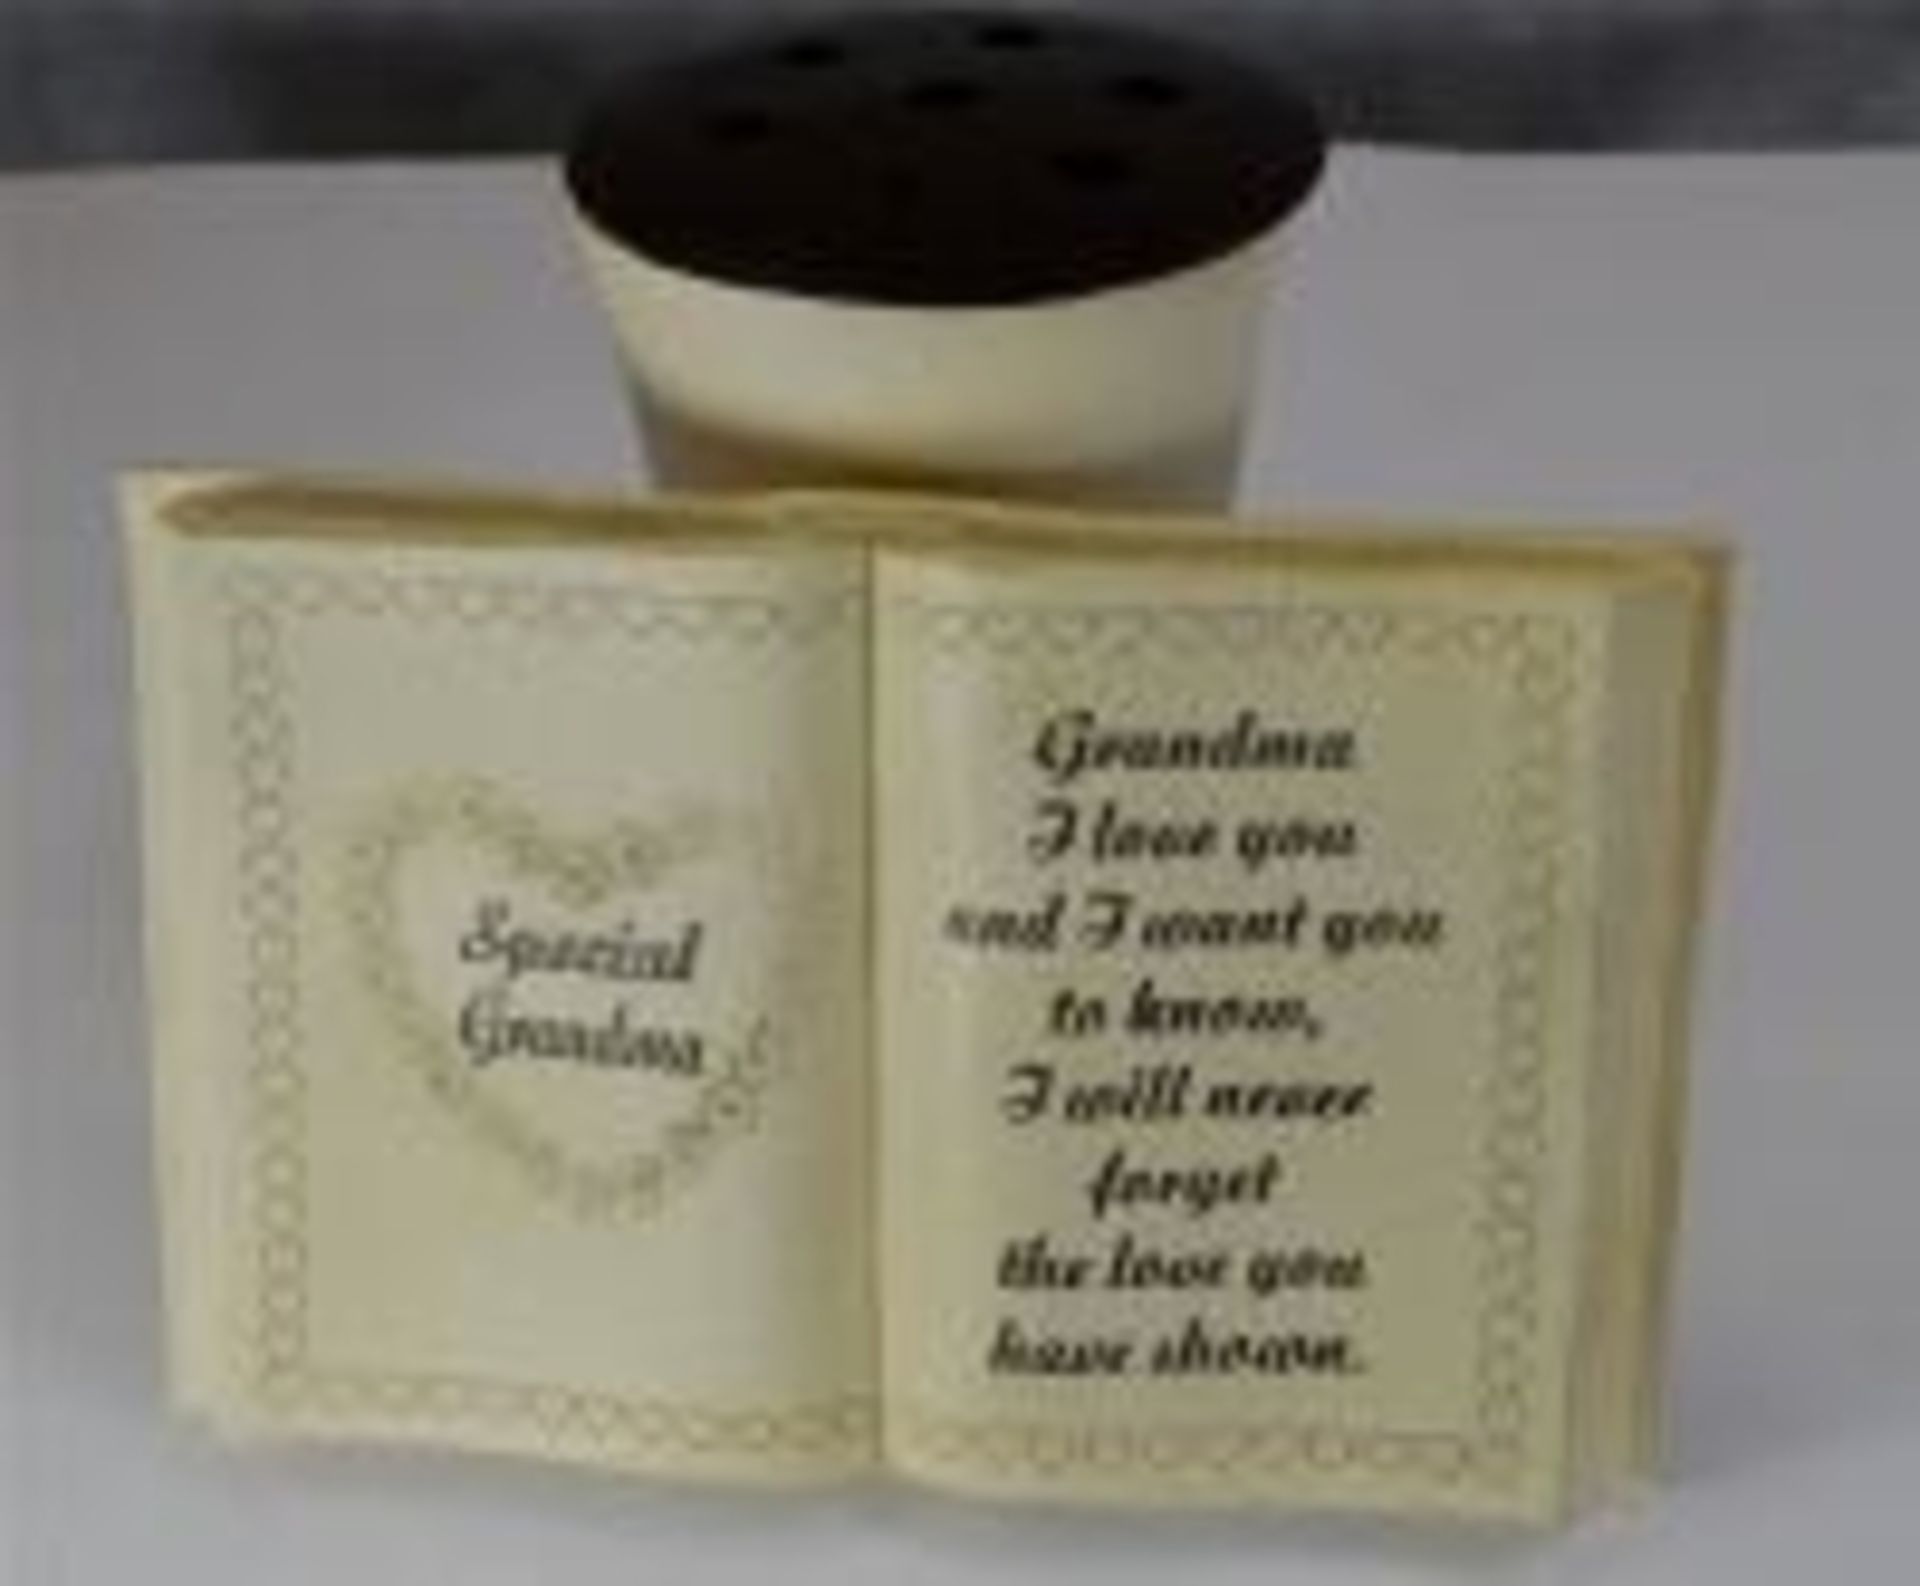 New & Sealed Packaging - Grandma Memorial Vase Book - 35 Items - RRP £524.65